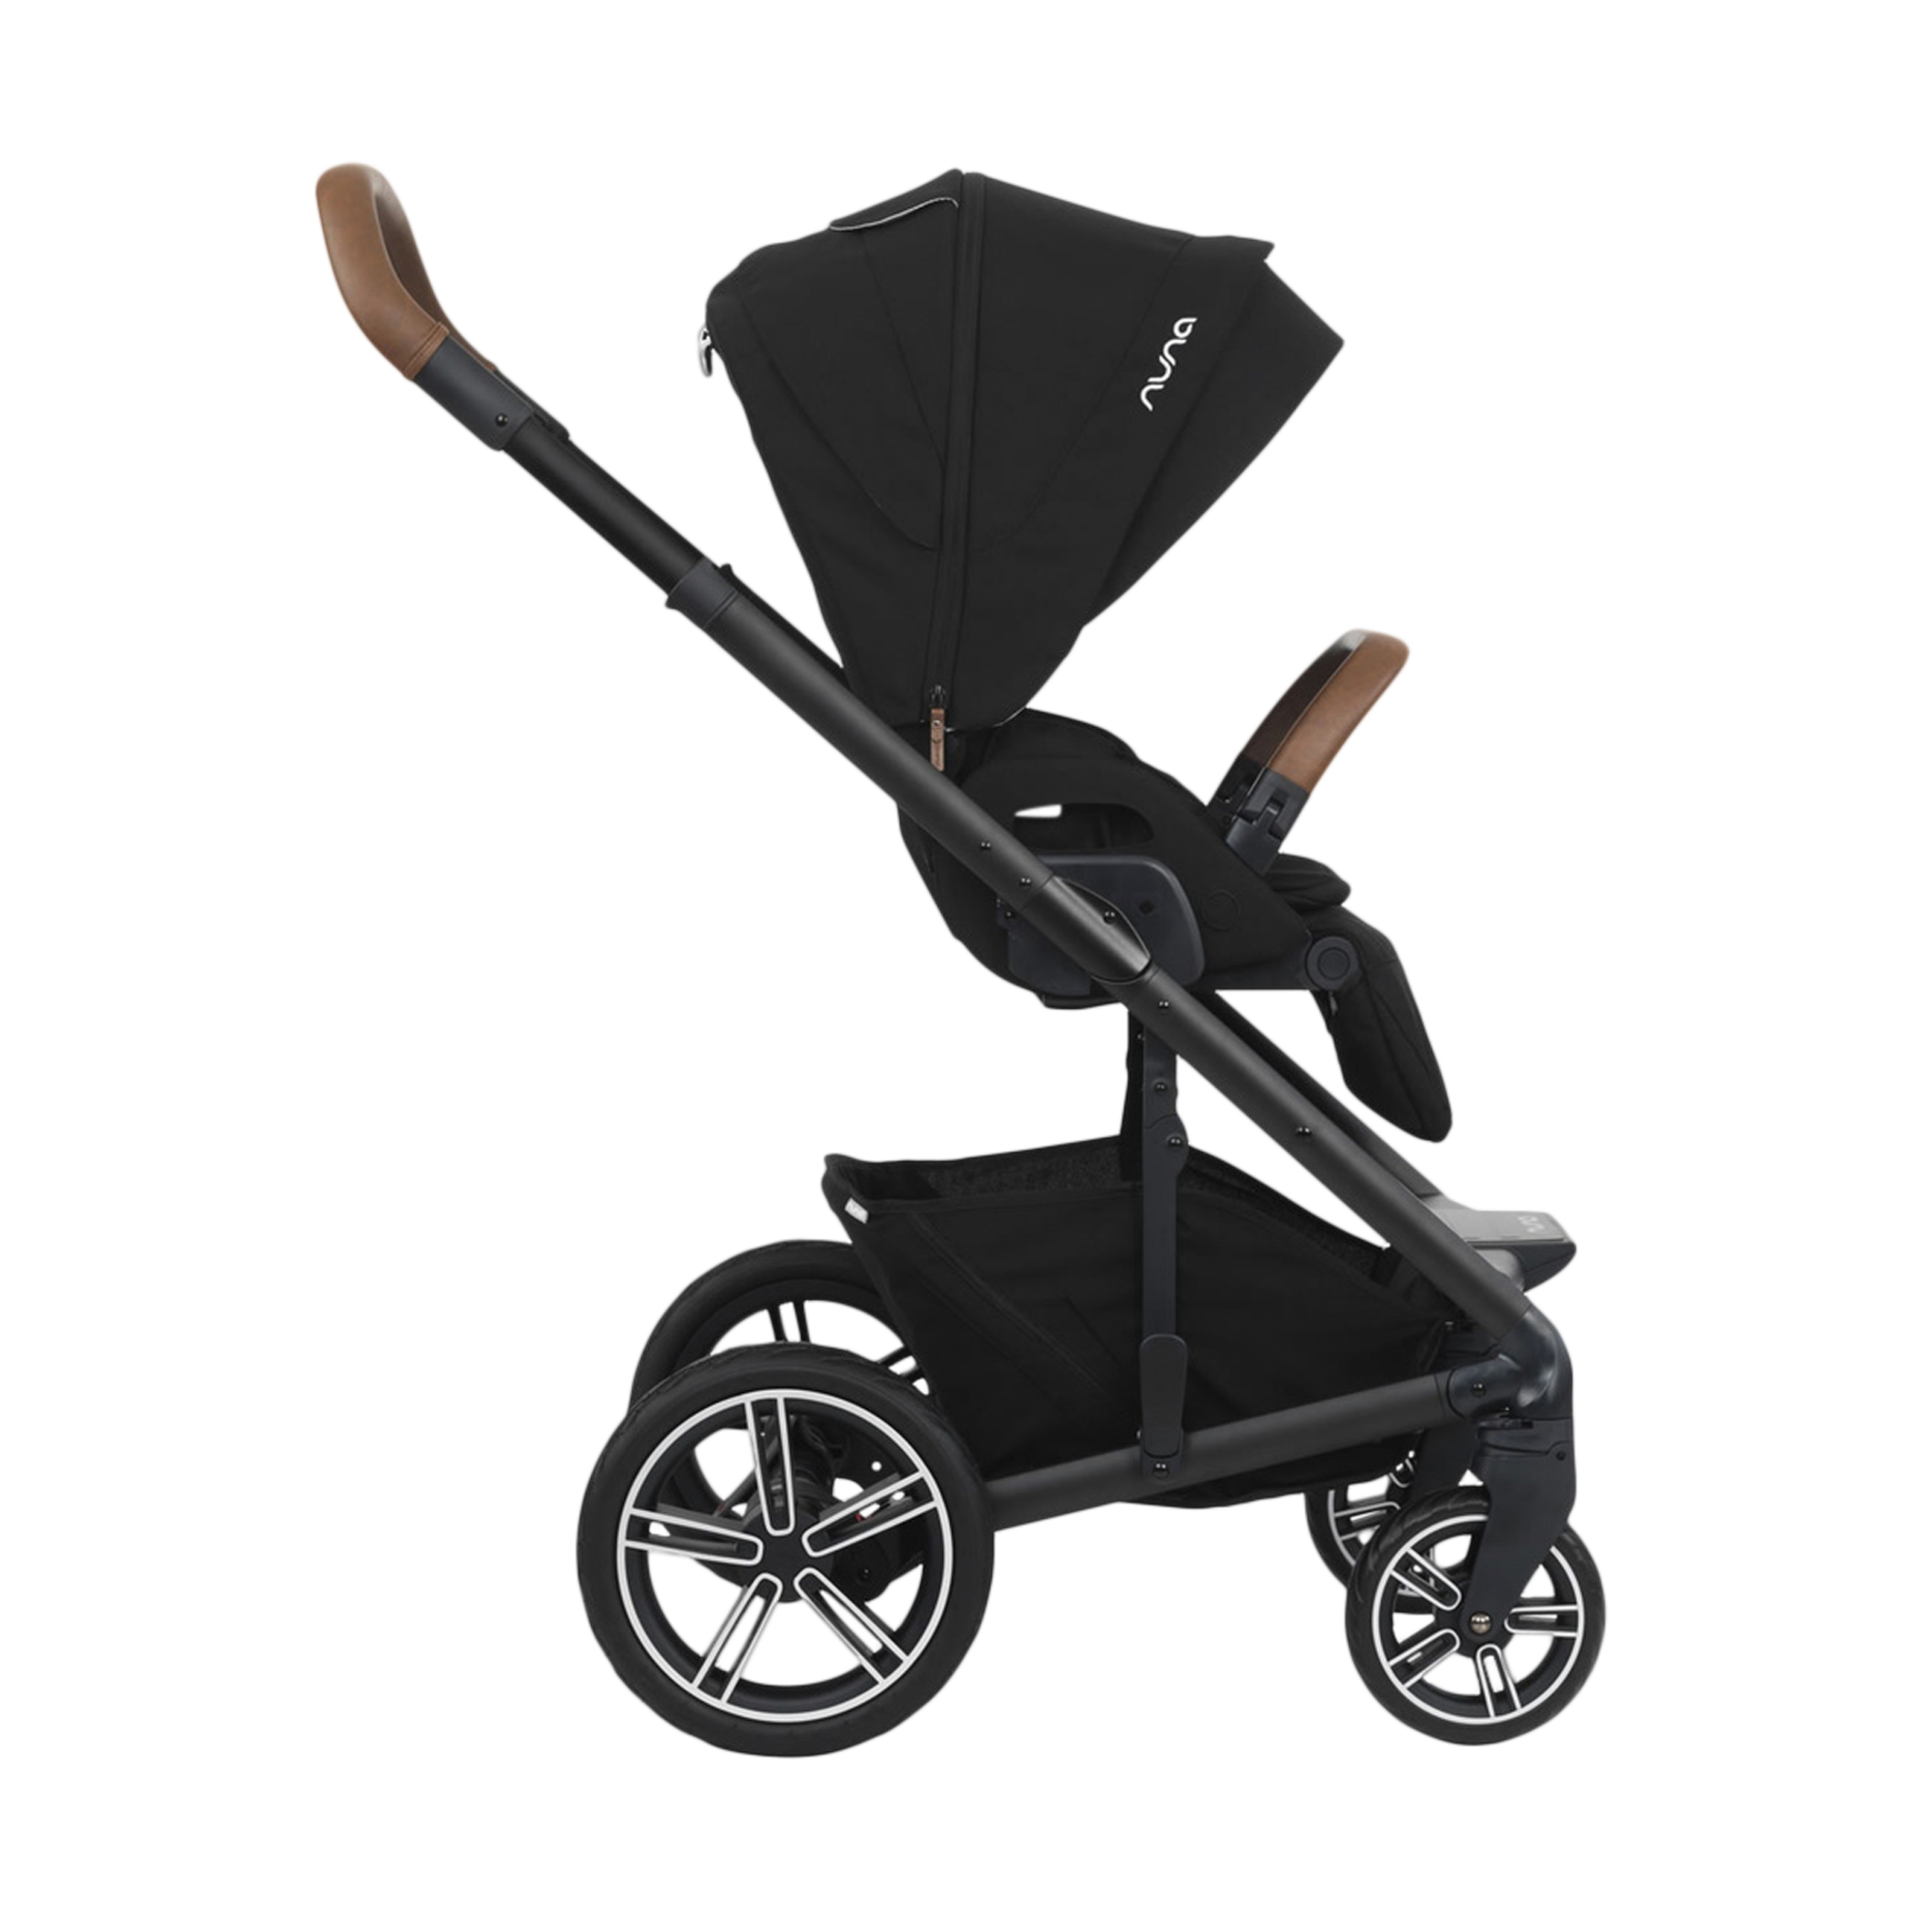 the nuna stroller